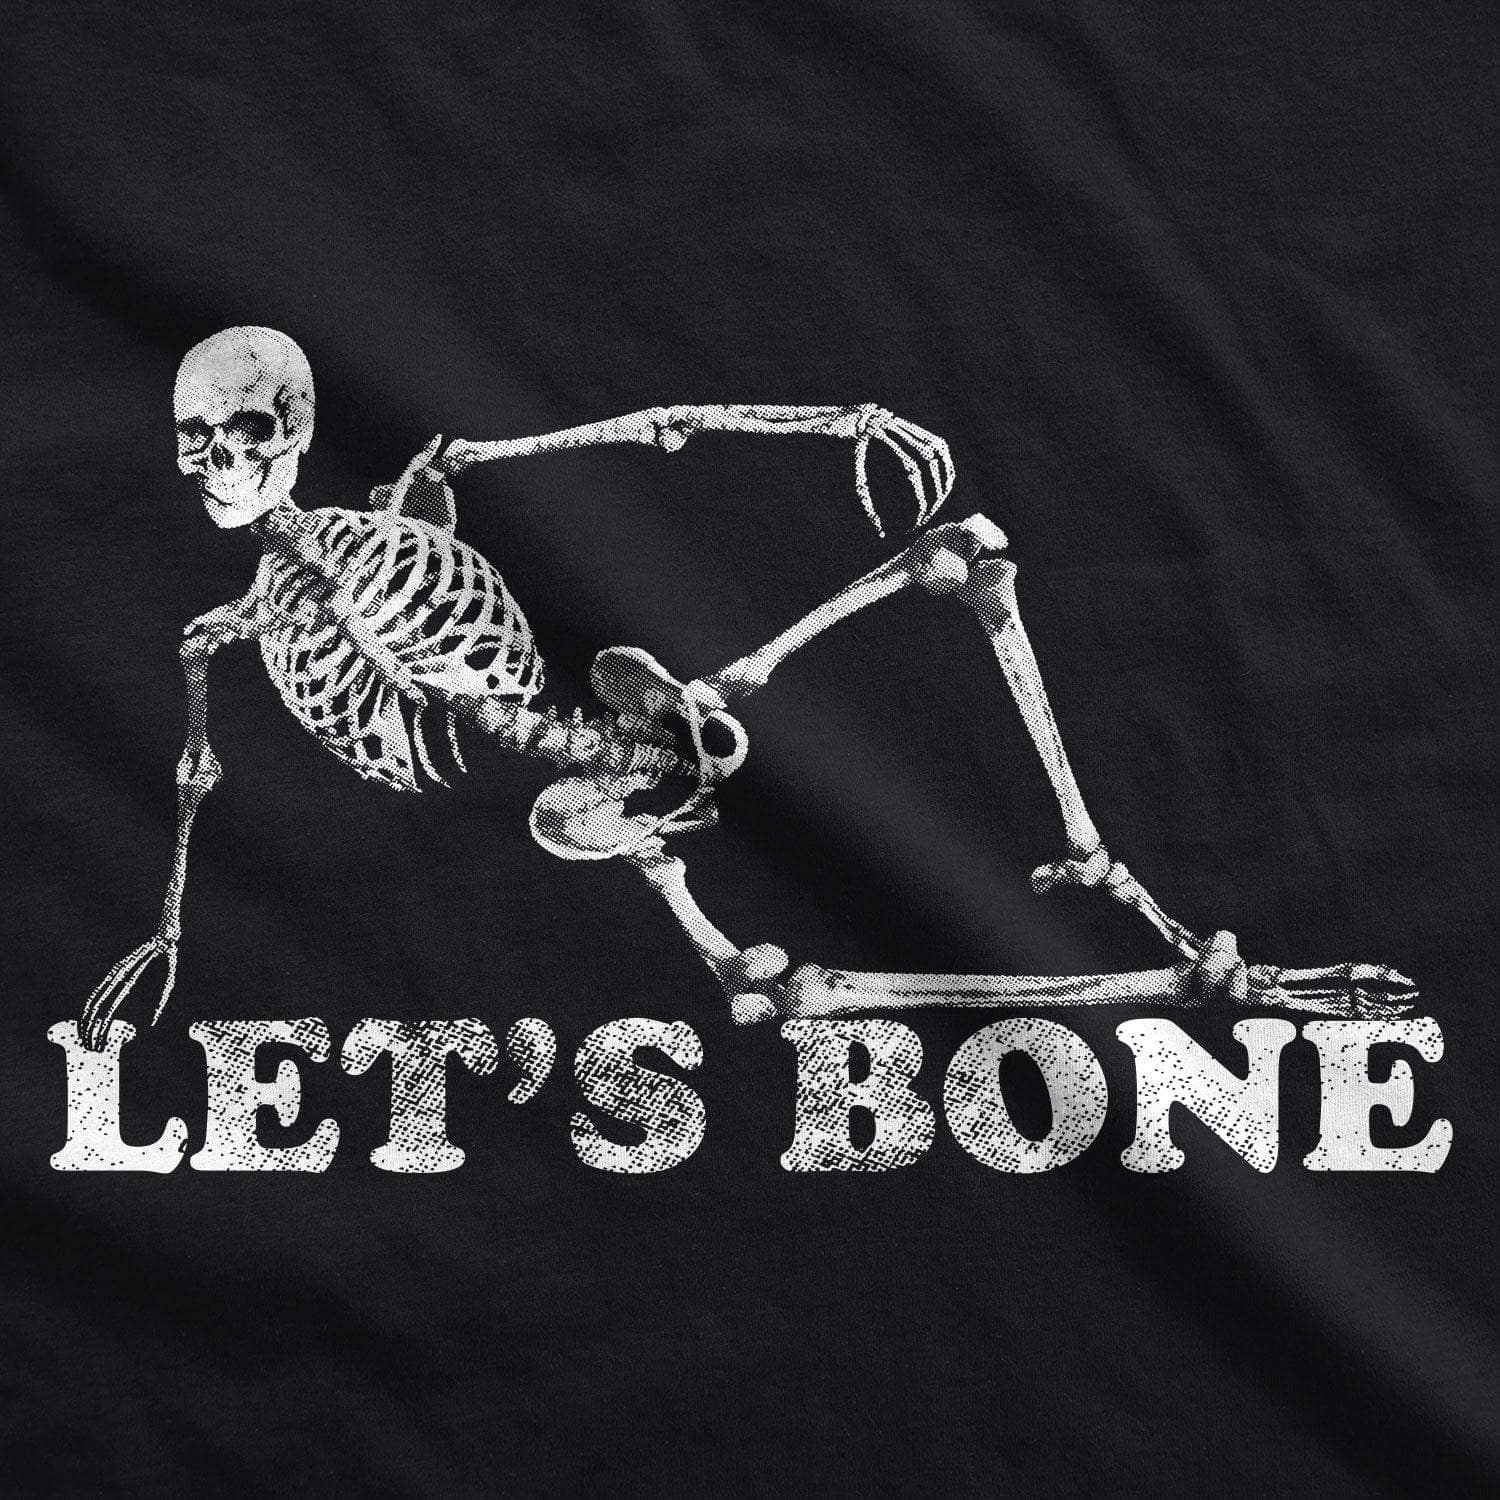 Let's Bone Men's Tshirt  -  Crazy Dog T-Shirts